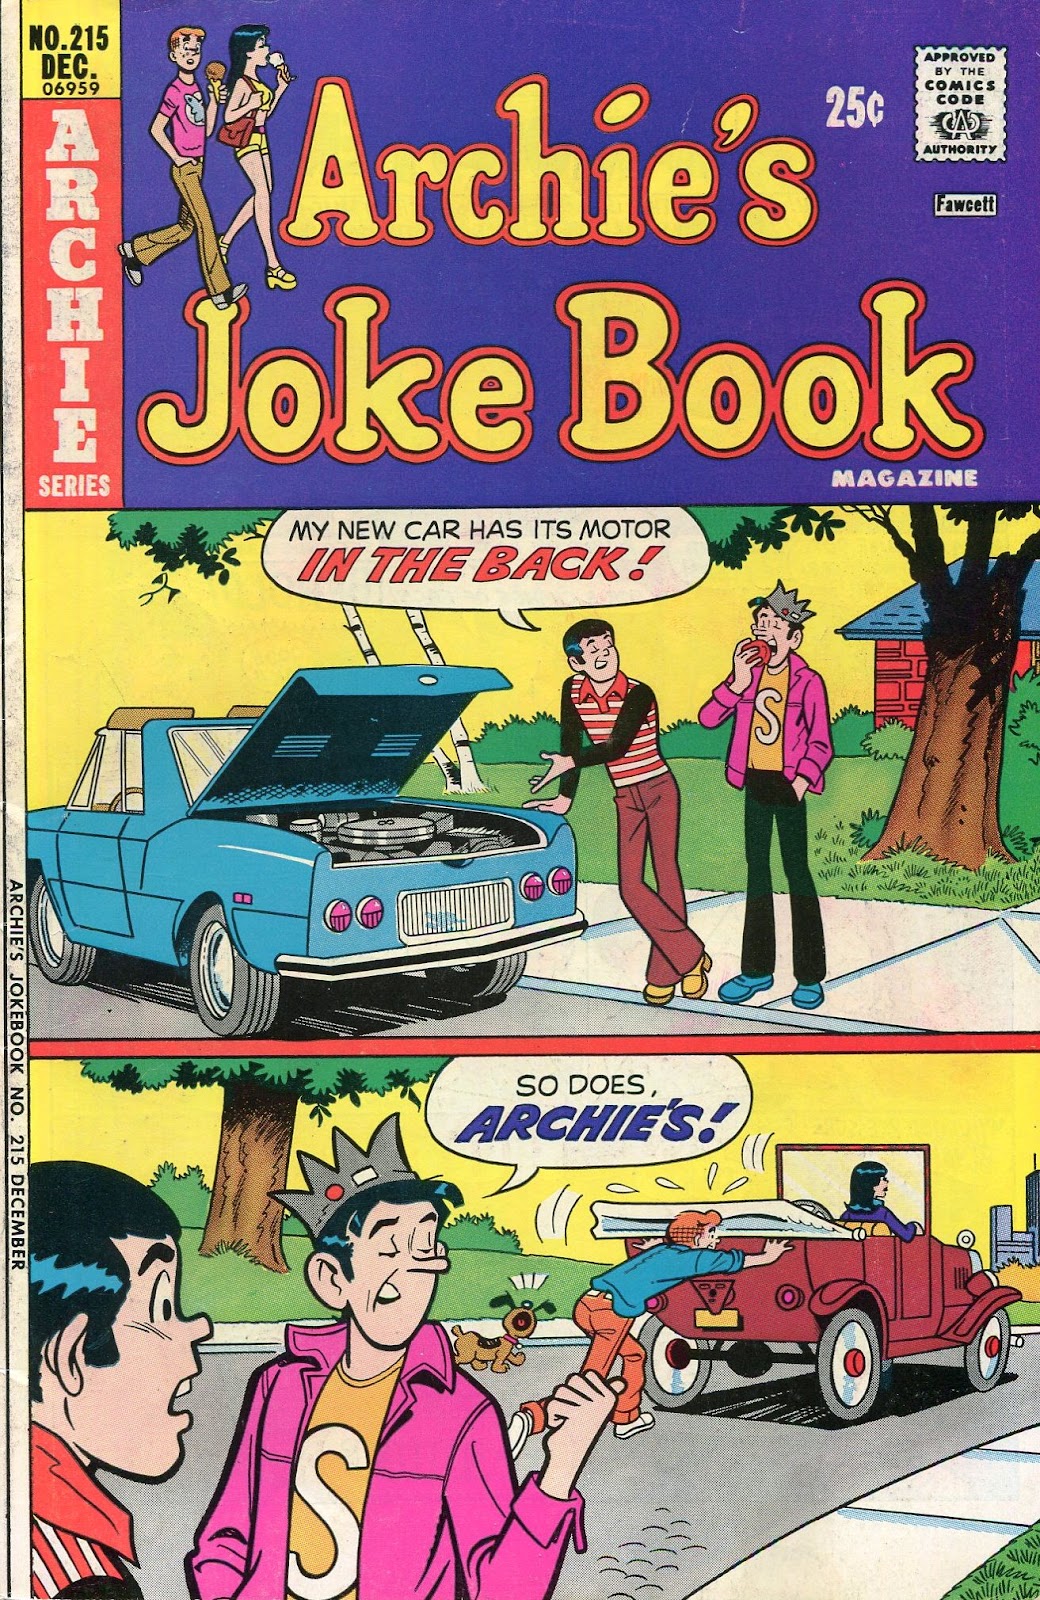 Archie's Joke Book Magazine issue 215 - Page 1